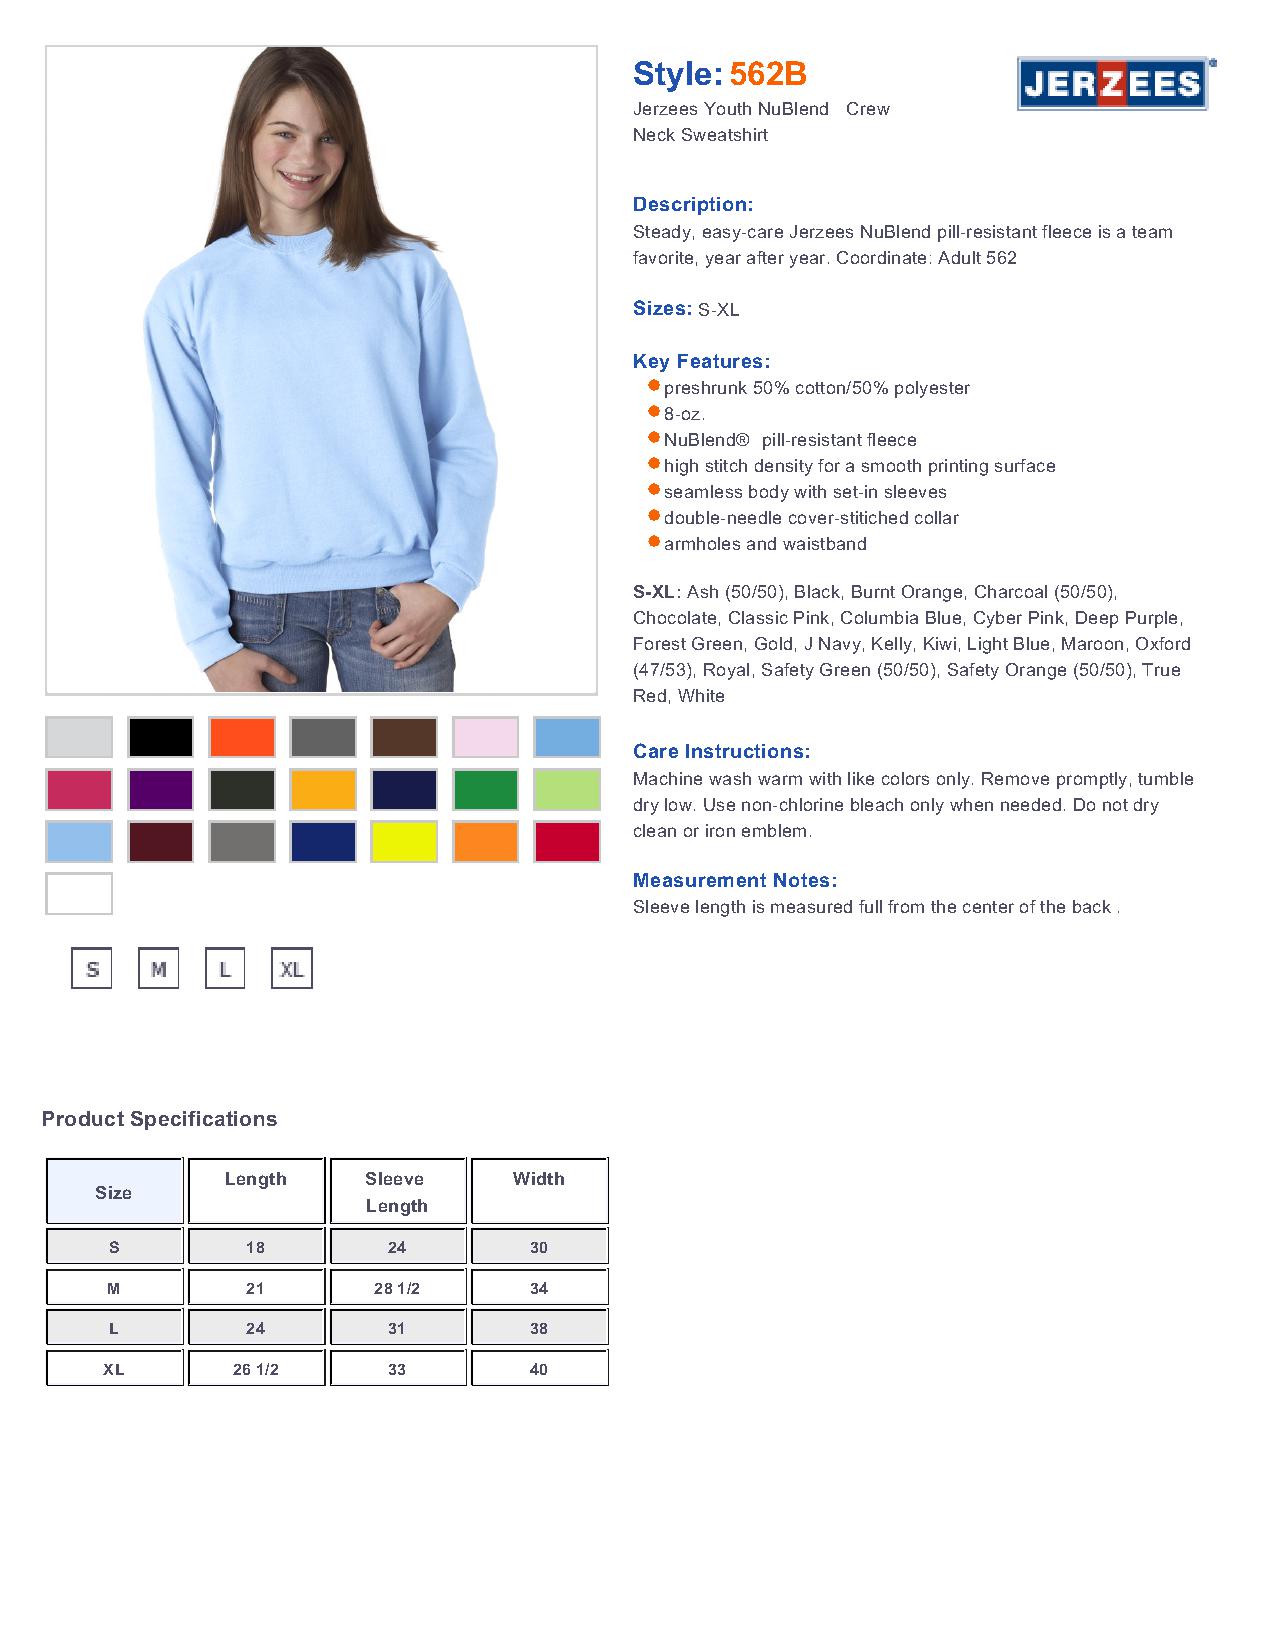 Jerzees 562B NuBlend Youth Crewneck Sweatshirt $6.95 - Youth's Fleece